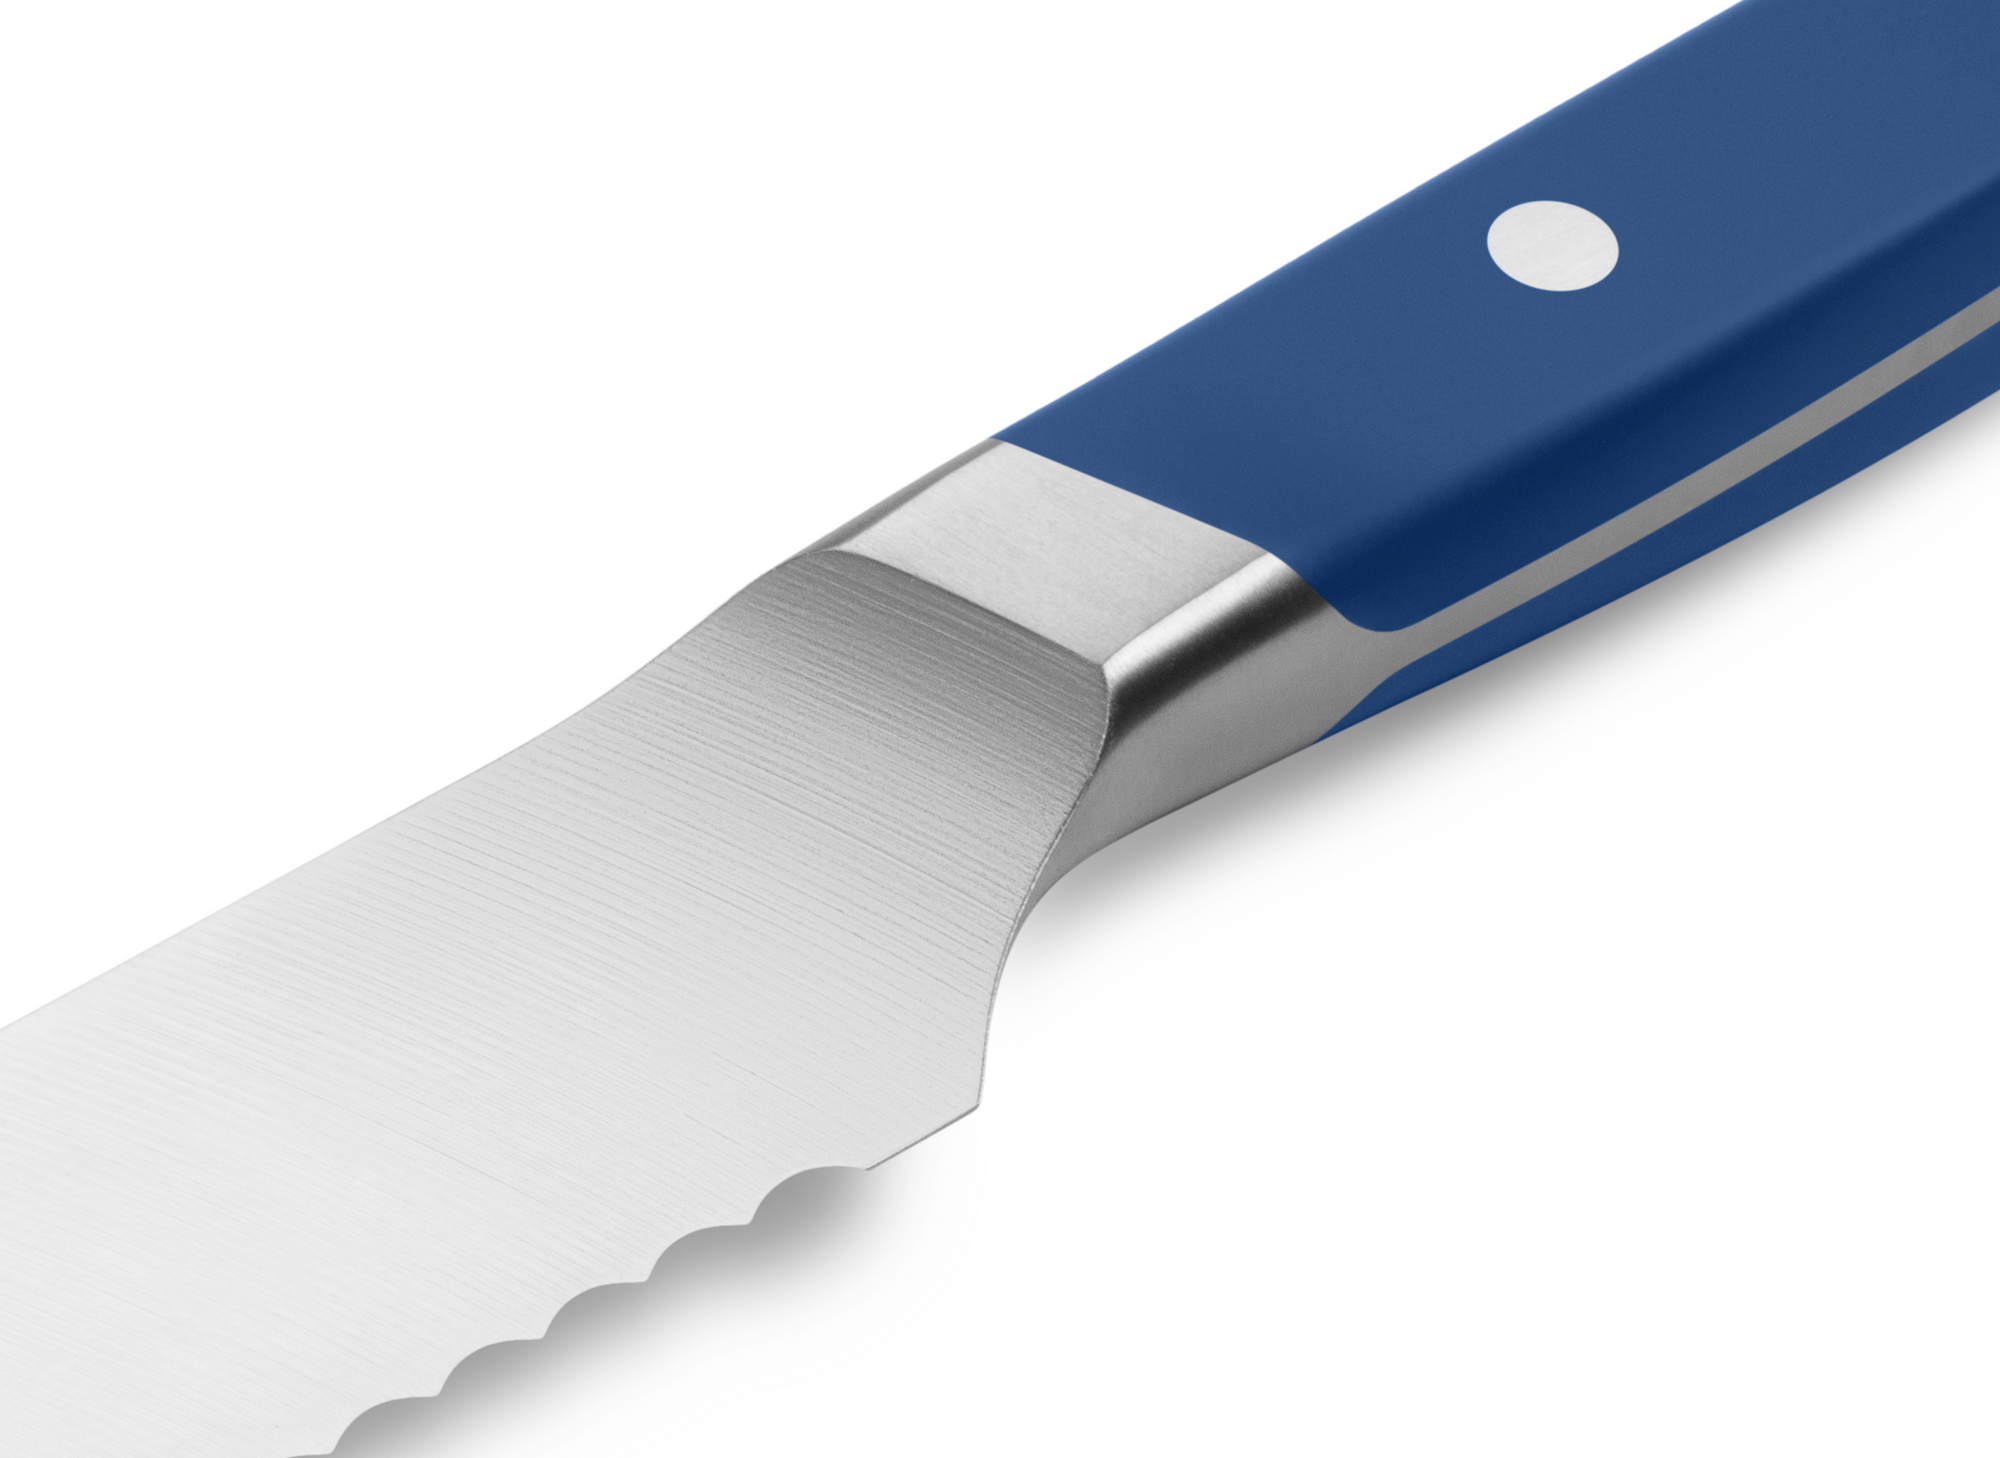 Misen Chef's Knife - 8 Inch